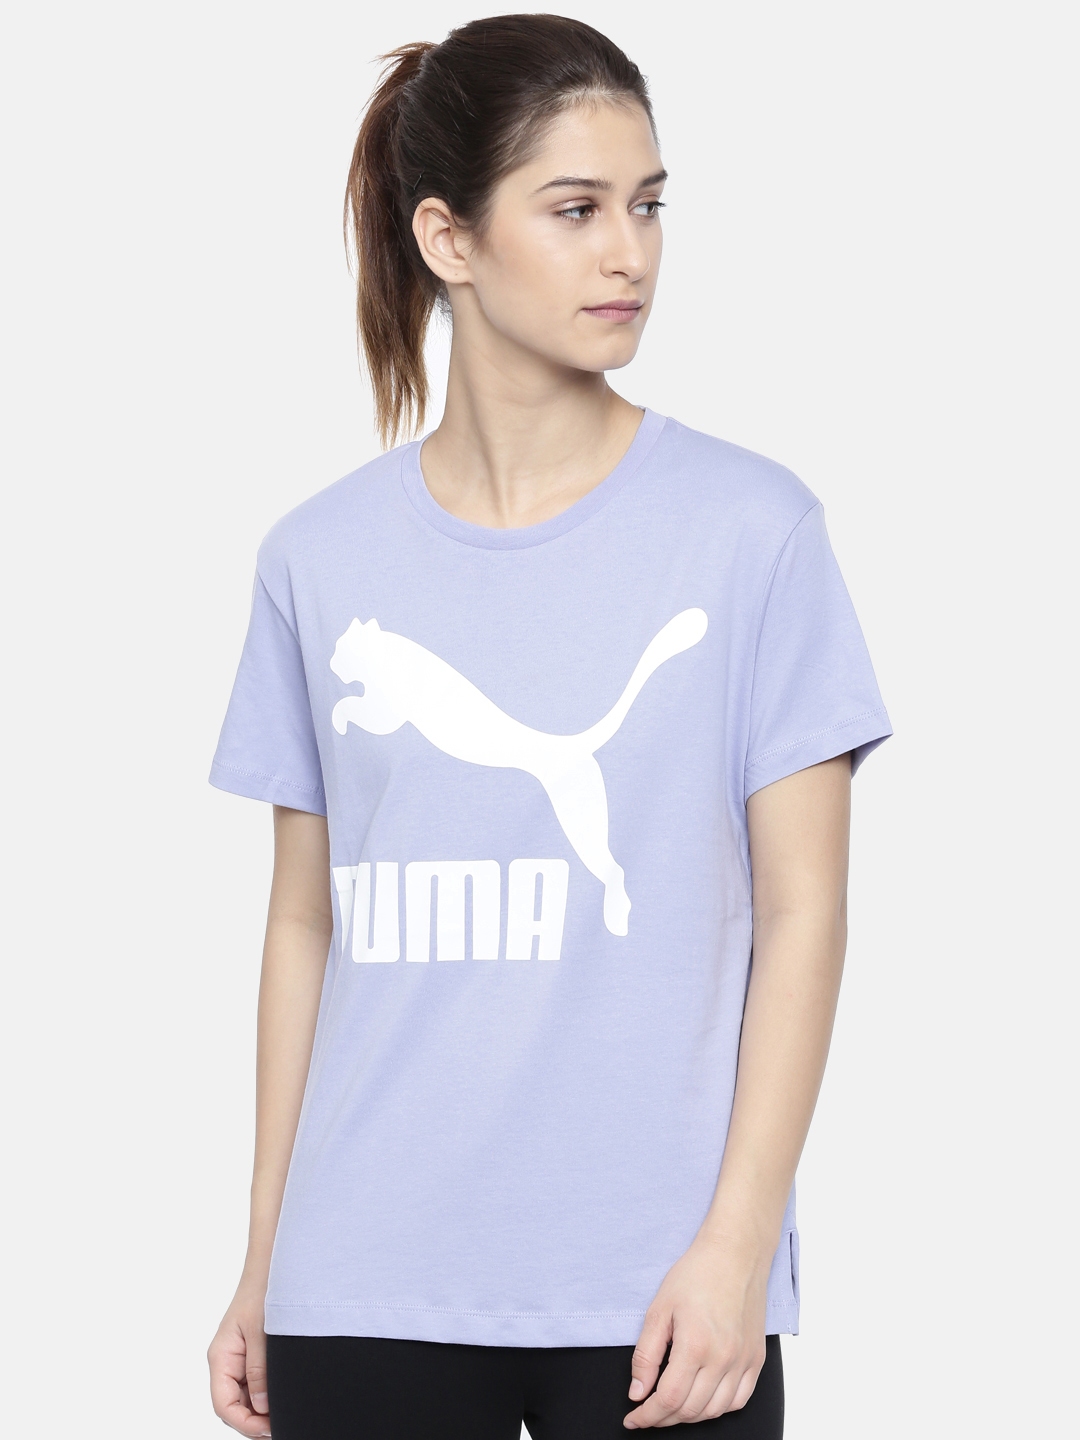 Buy Puma Women Lavender Printed Round Neck Pure T Shirt - Tshirts for Women | Myntra